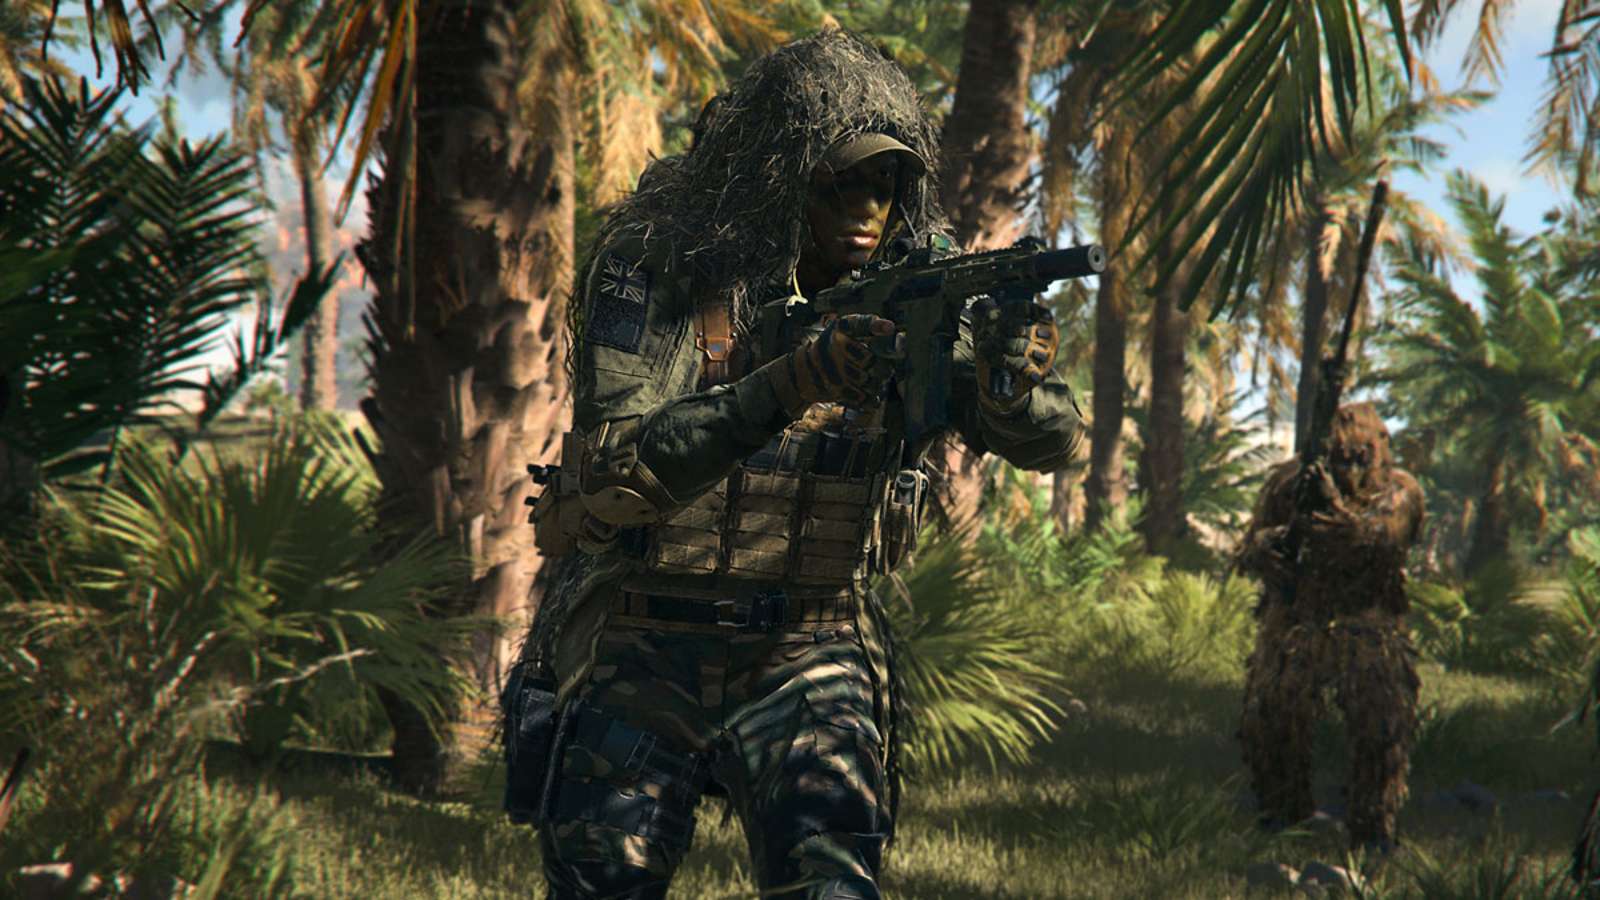 Gaz in Modern Warfare 2 moving through a wooded area.